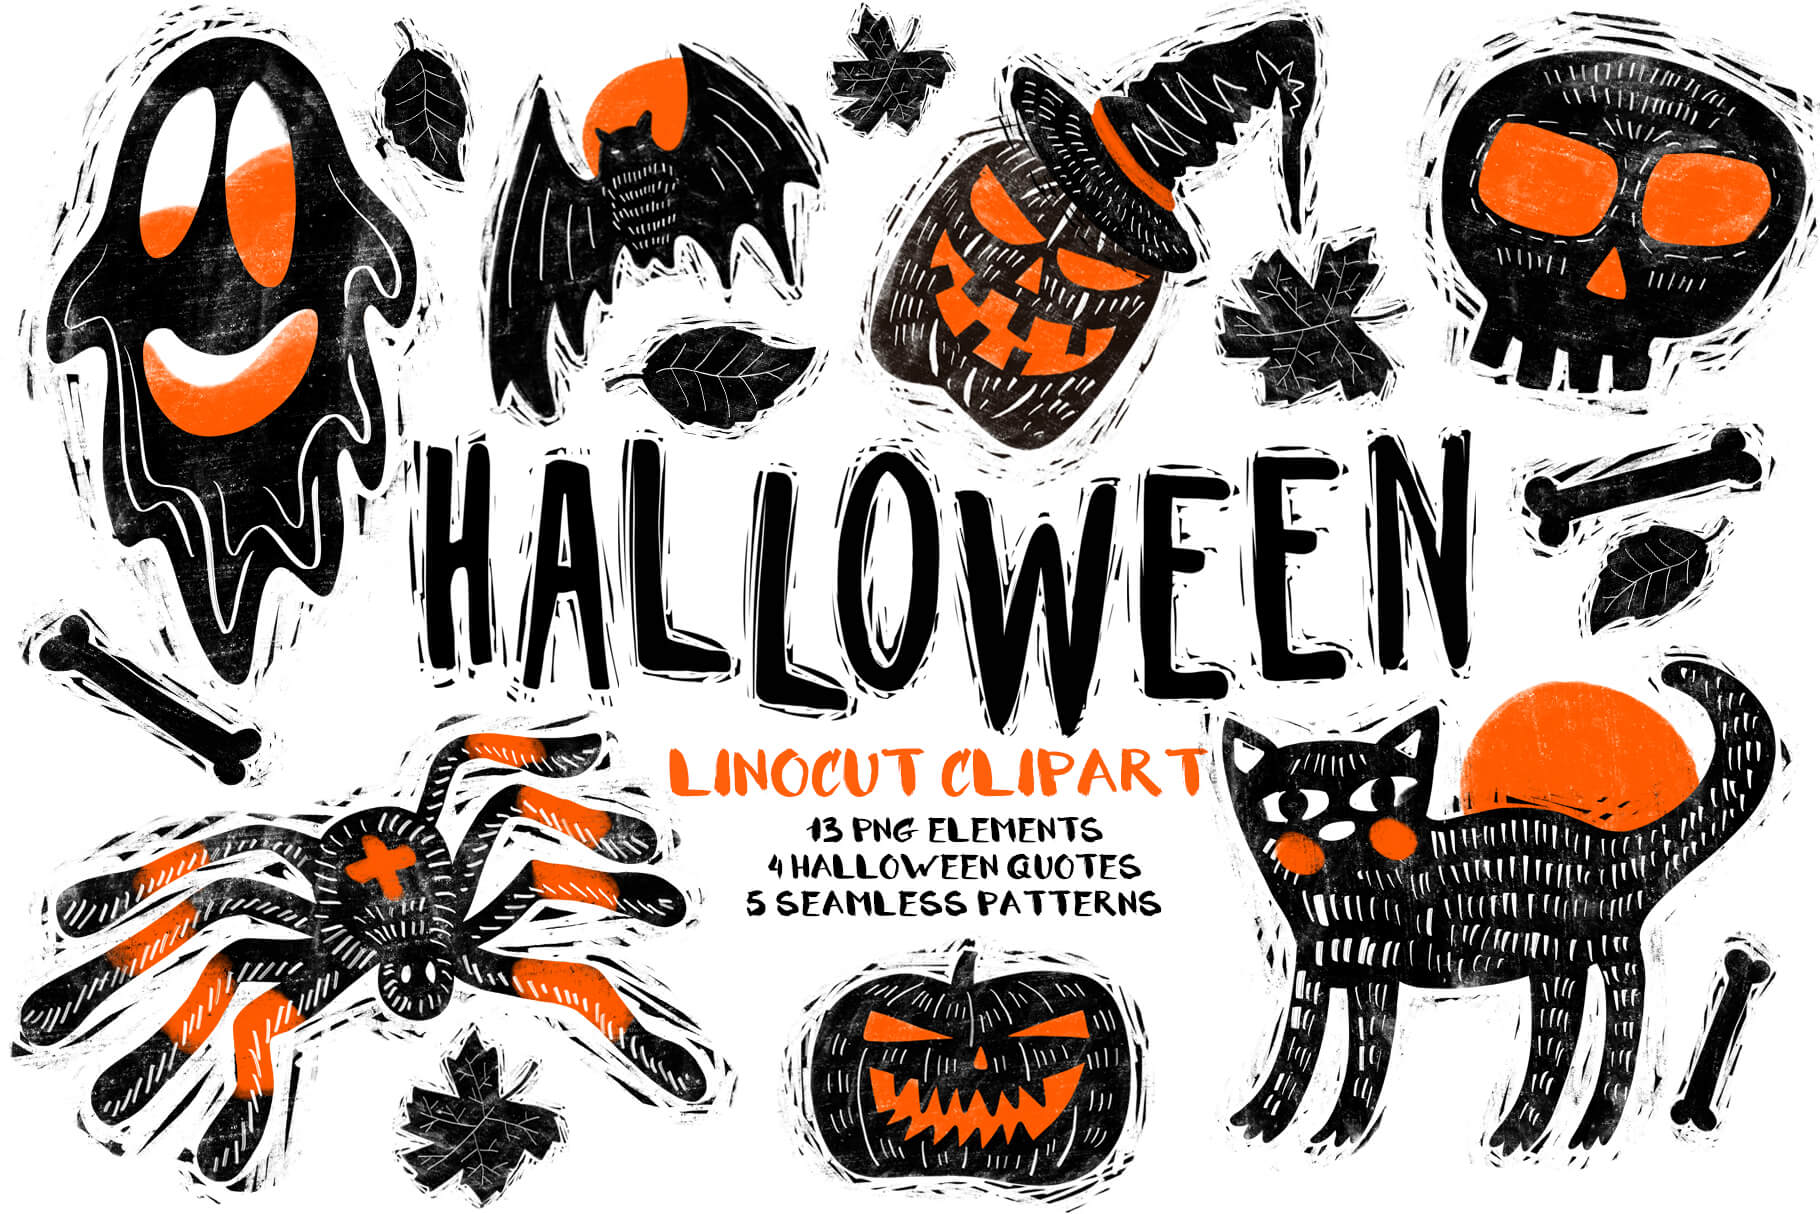 Halloween Linocut Clipart cover.